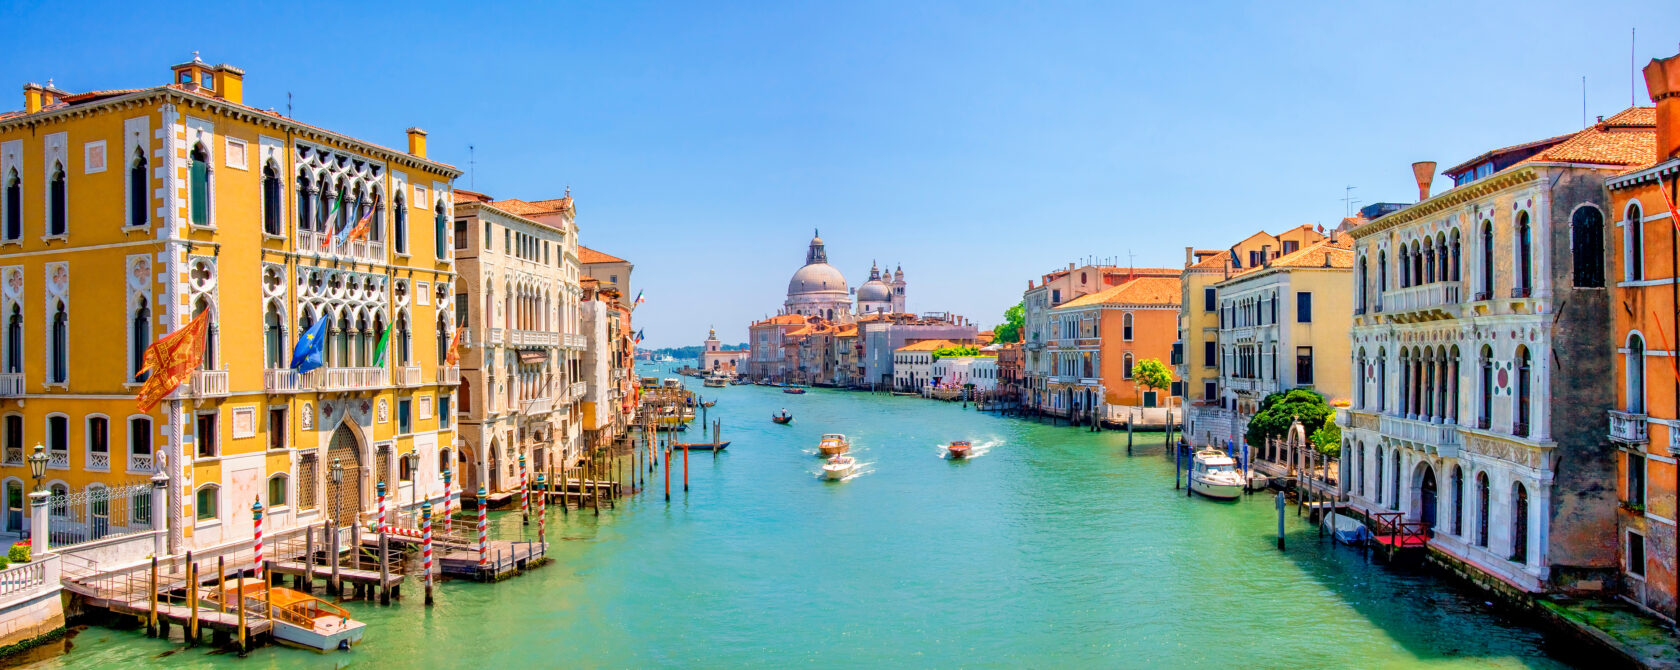 A view of the Grand Canal and Basilica Santa Maria della Salute in Venice, Italy, a short train ride from Venice, Mestre (an Atlantis site).